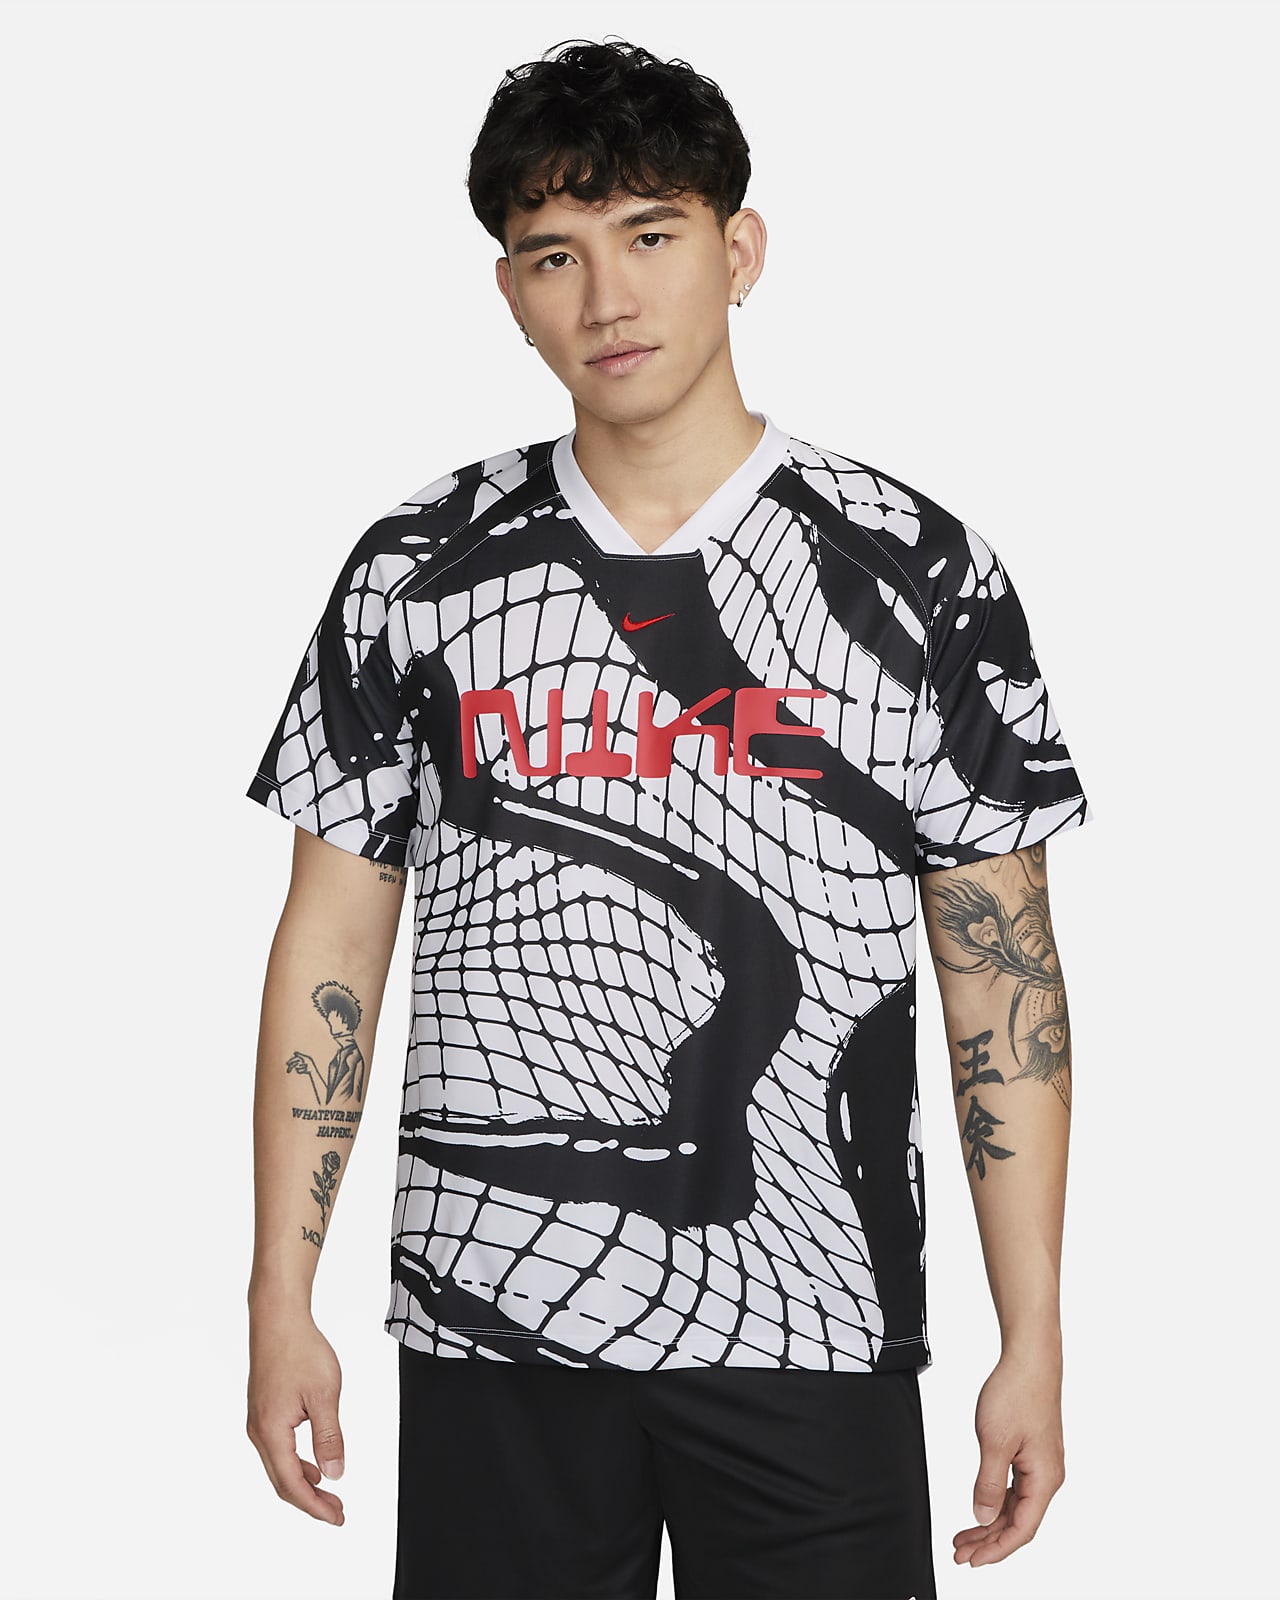 Nike Dri-FIT Men's Football Shirt